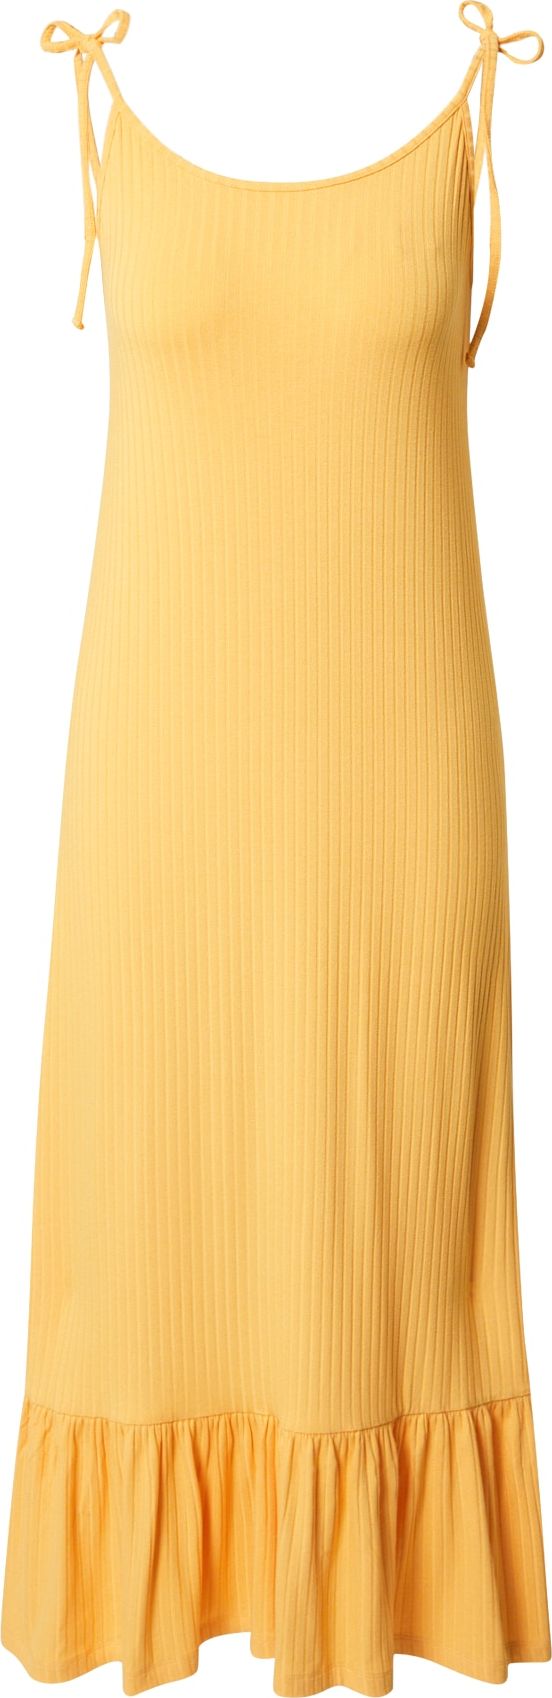 MOSS COPENHAGEN Šaty 'Leane Kimmie' zlatě žlutá